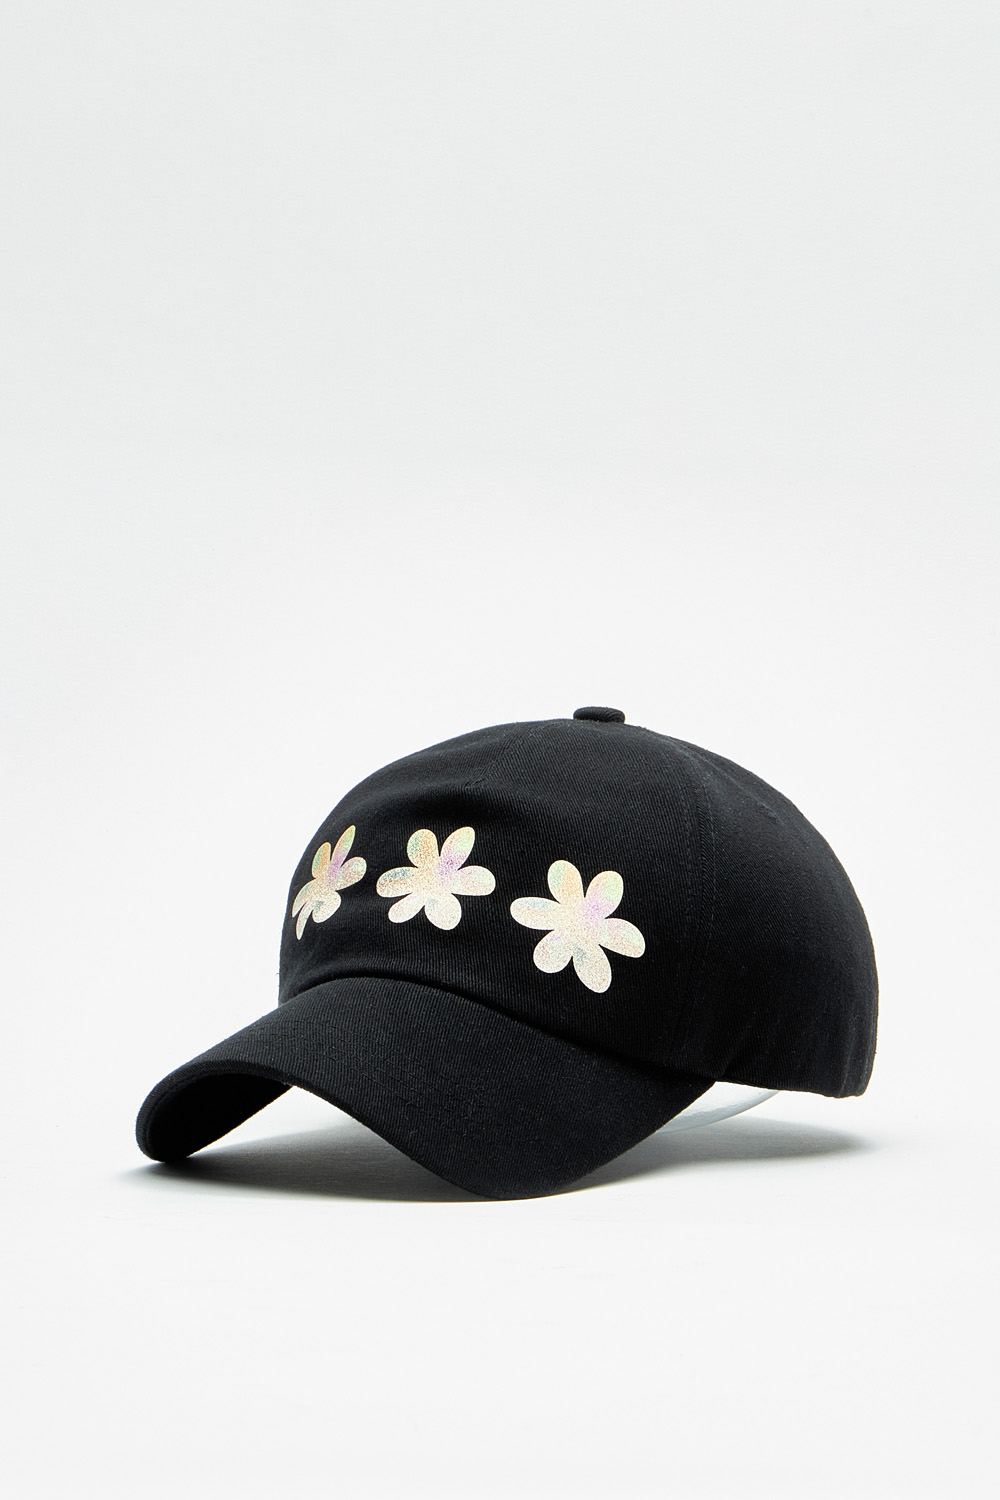 Flower Graphic Ball Cap - Black